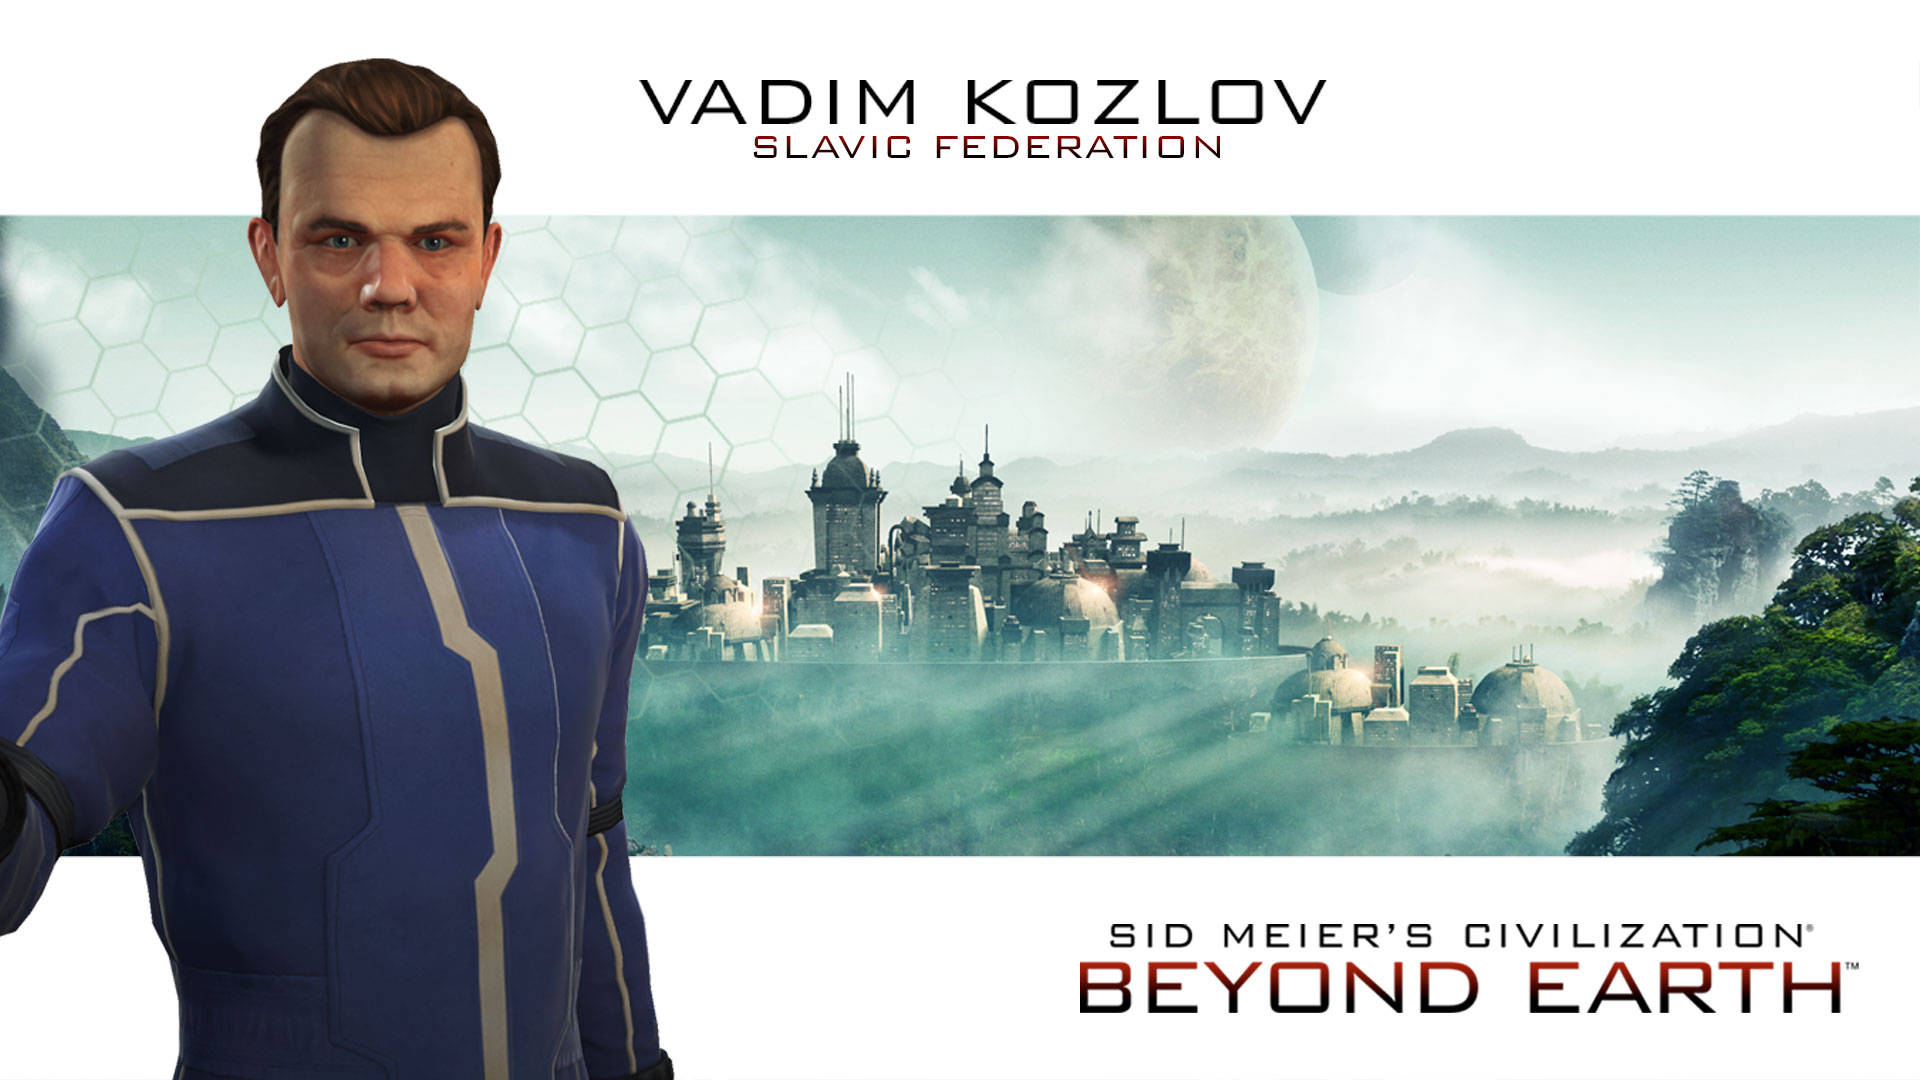 Vadim Kozlov Civilization Beyond Earth Background